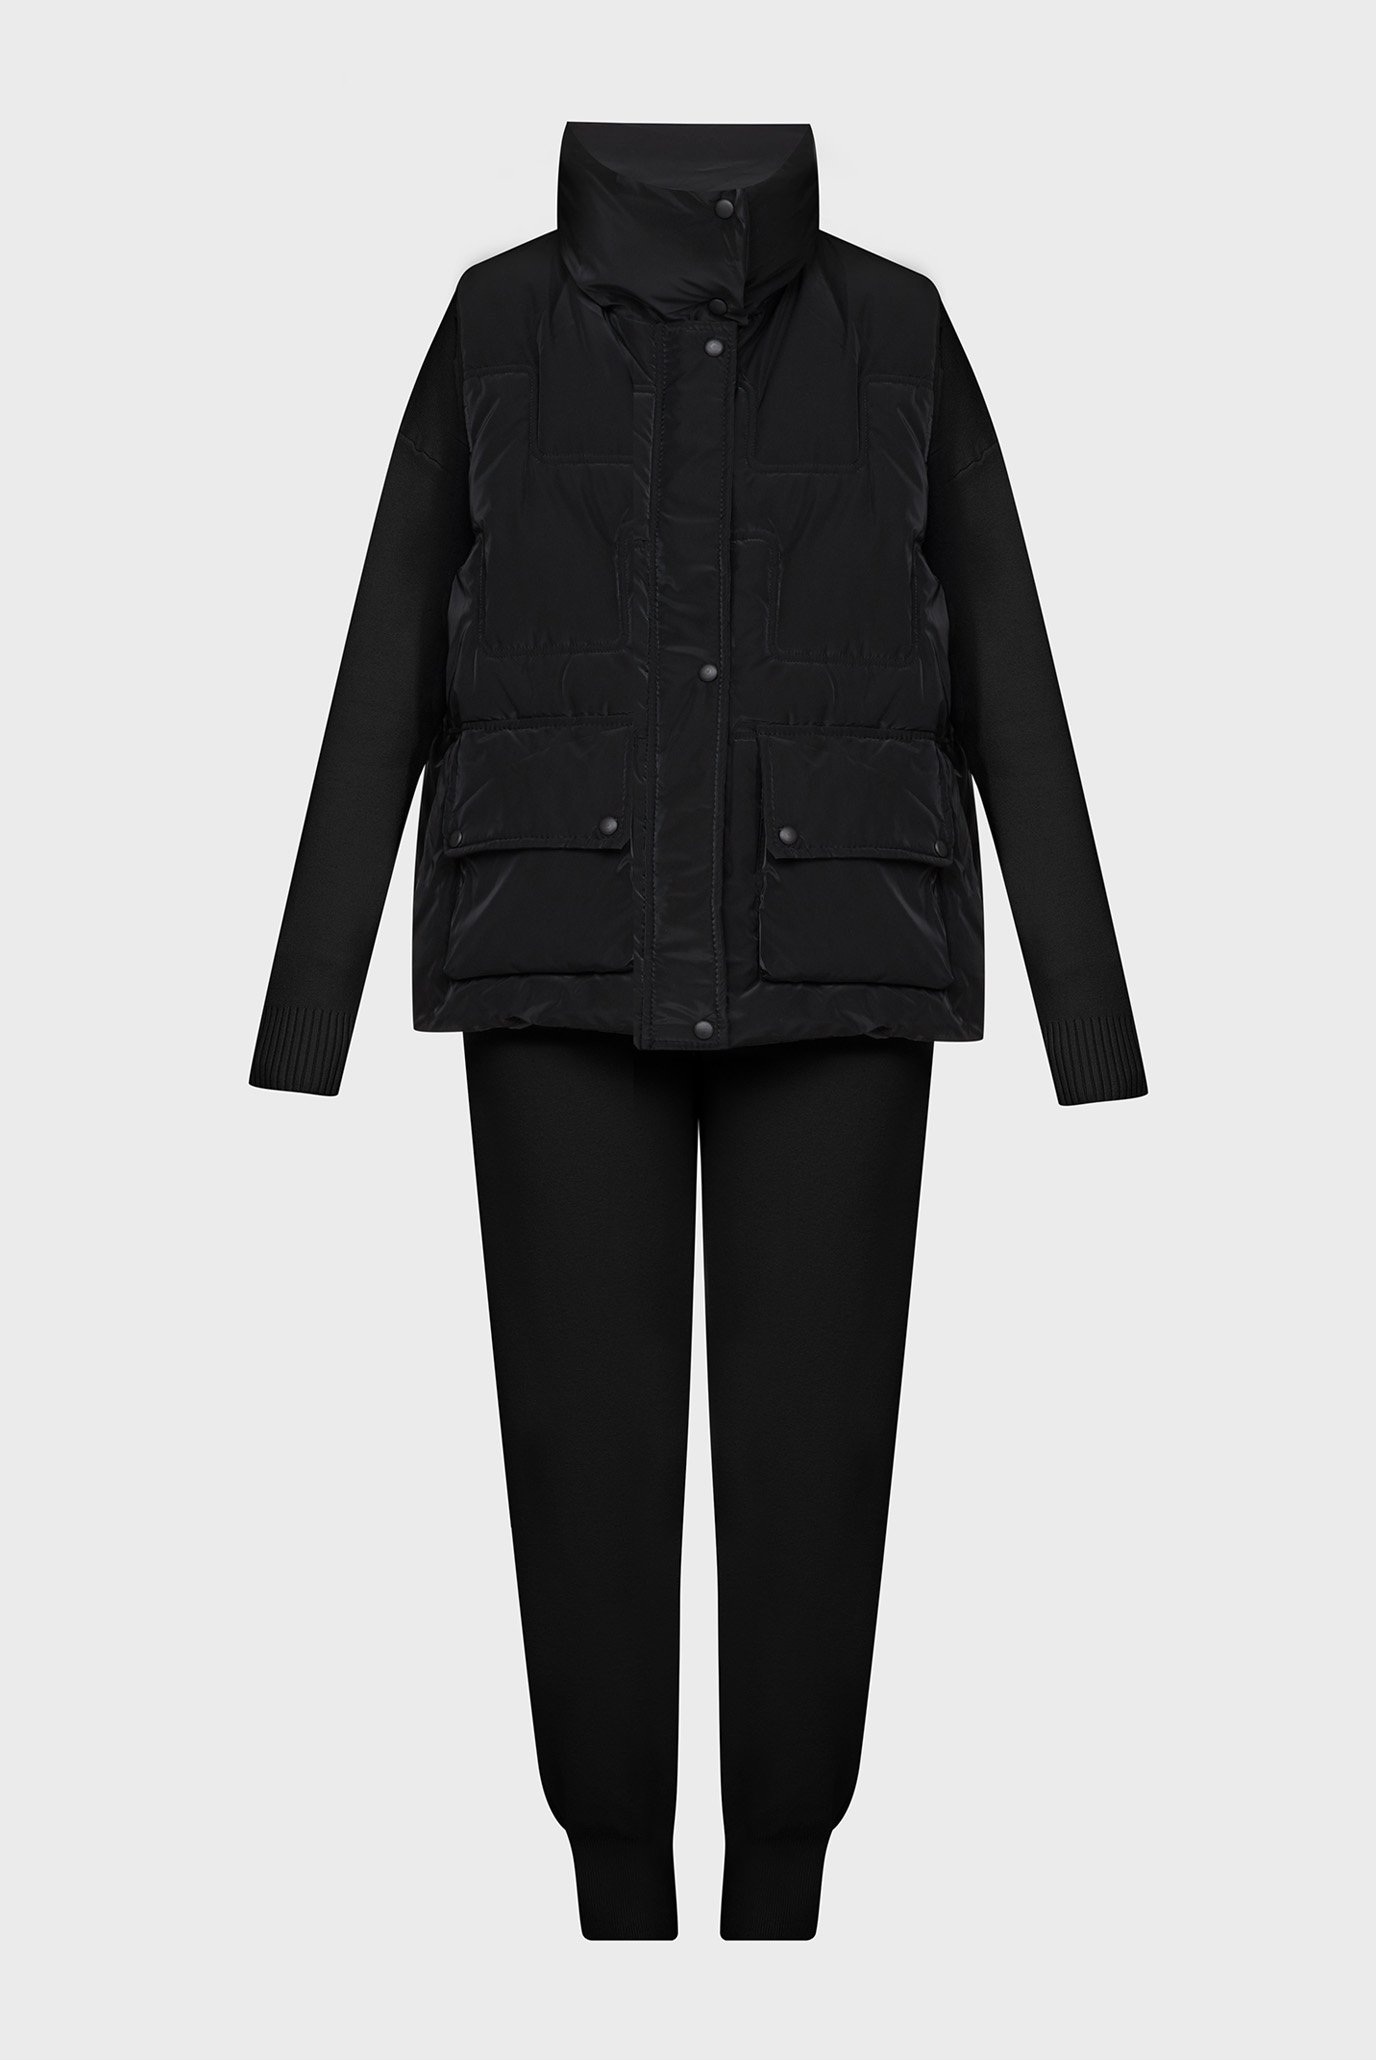 Жіночий чорний комплект одягу (жилет, светр, штани) 1